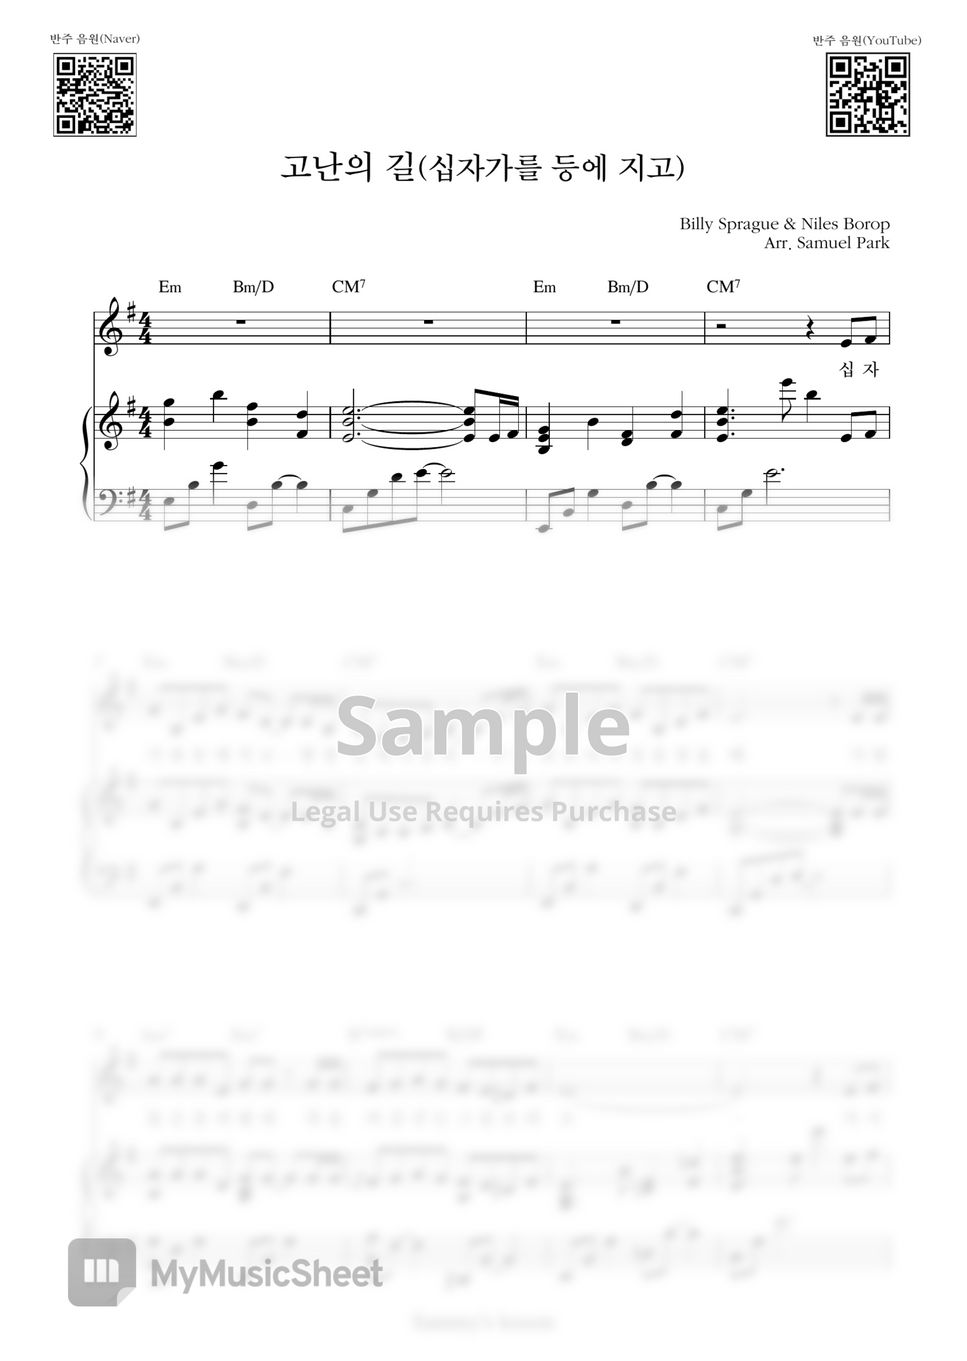 Billy Sprague, Niles Borop - 고난의 길 (Via Dolorosa) (Piano Cover) by Samuel Park